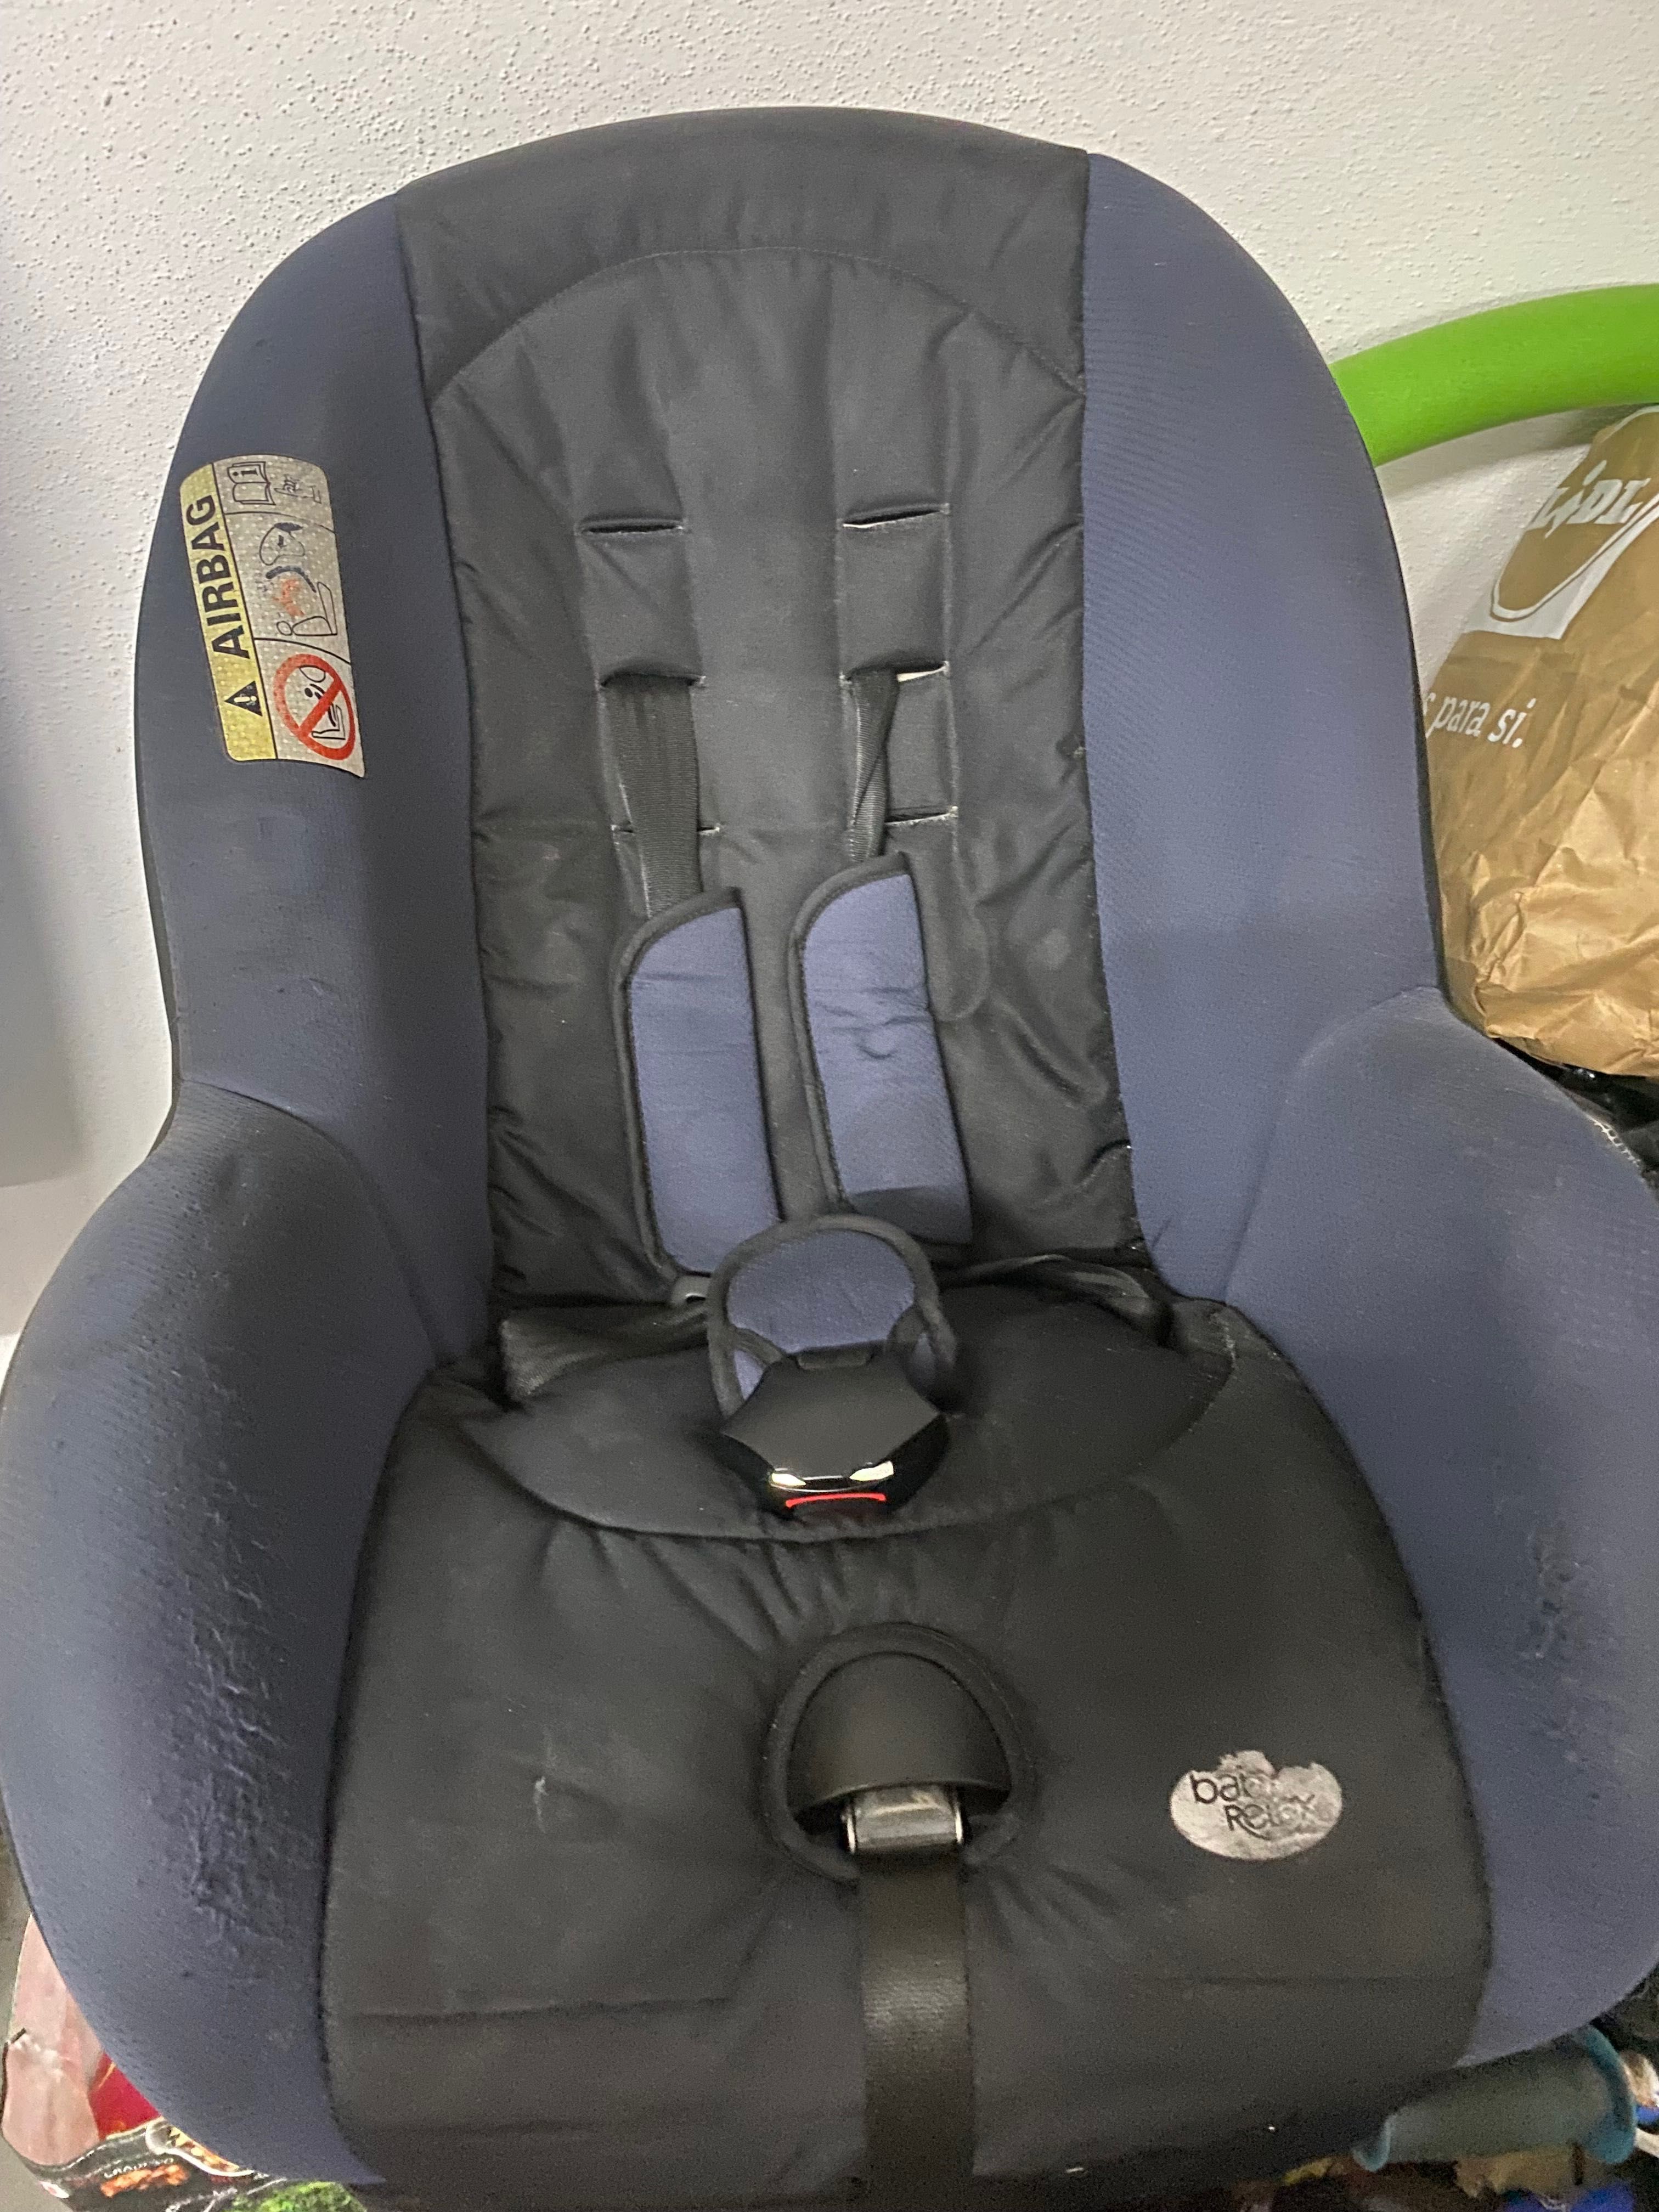 Cadeira auto baby relax